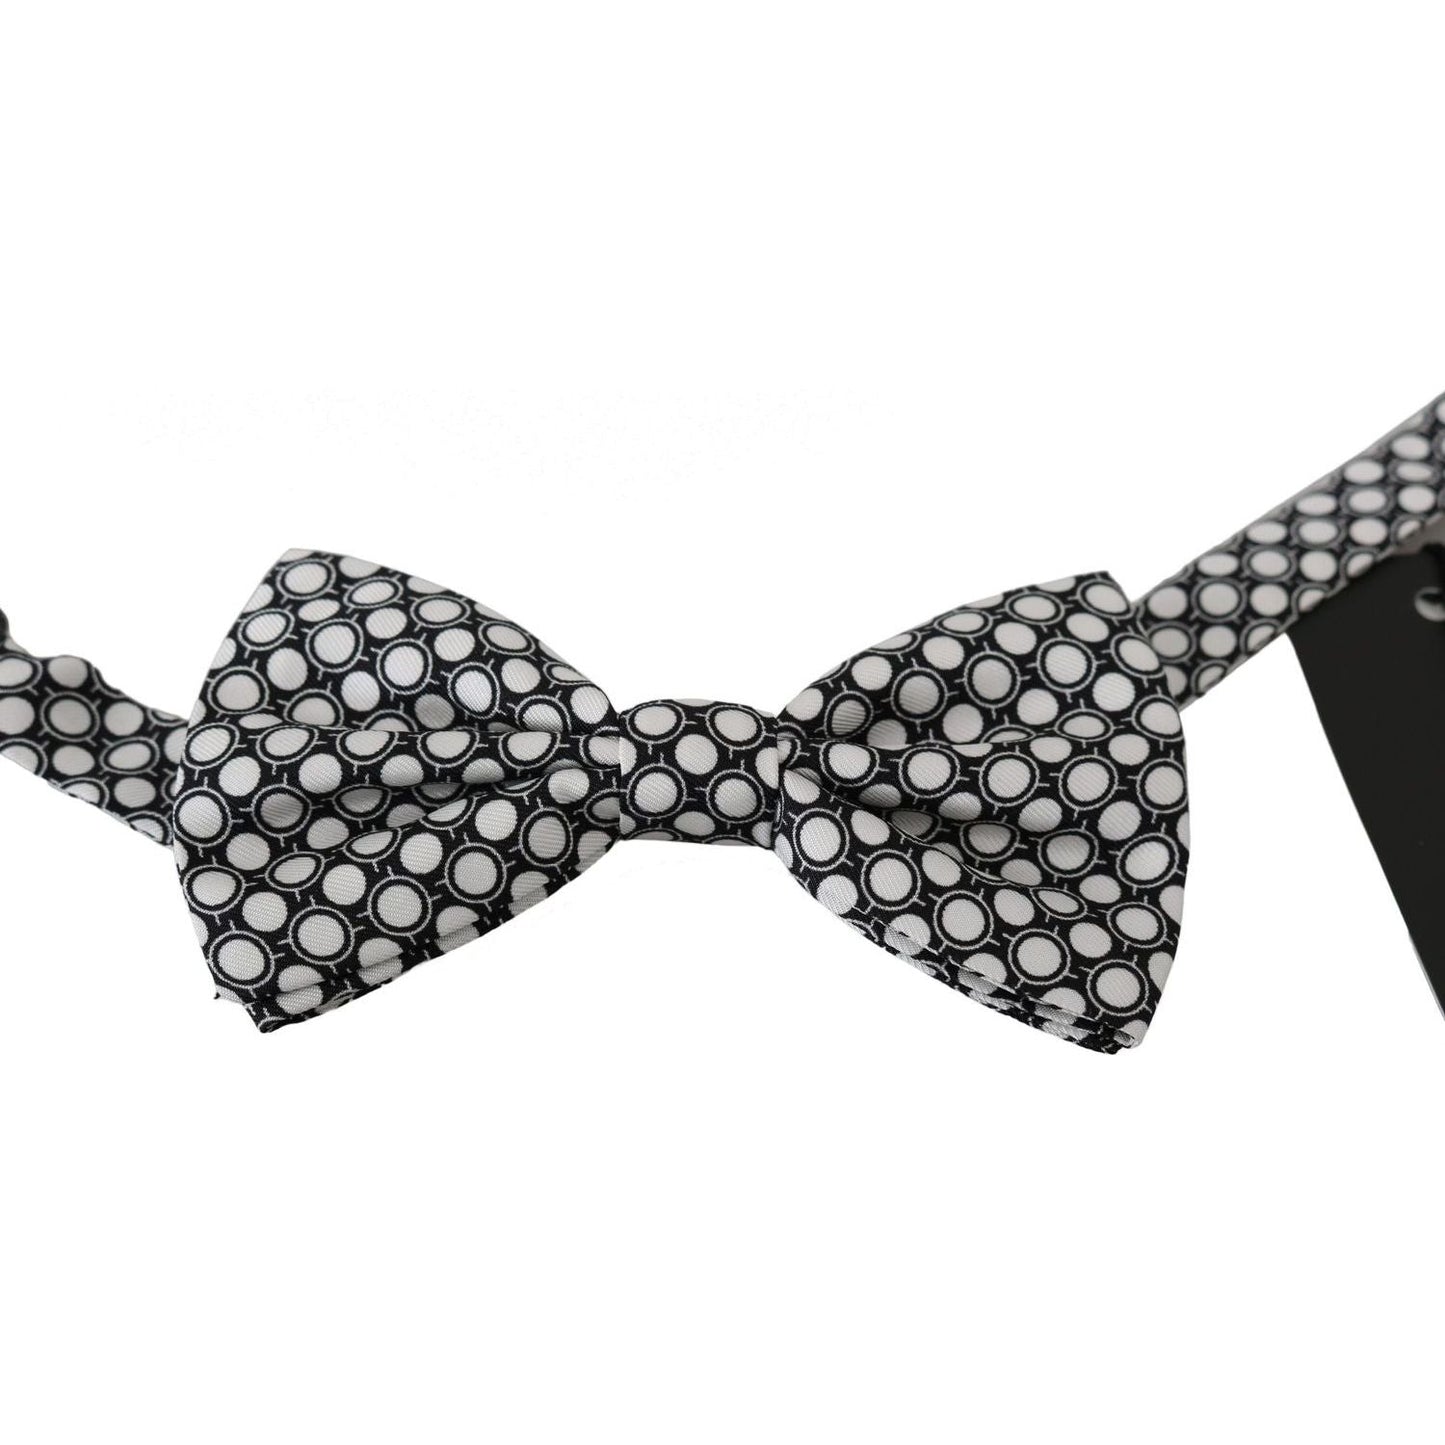 Dolce & Gabbana Elegant Black White Circle Silk Bow Tie Bow Tie men-black-white-circles-adjustable-neck-papillon-bow-tie IMG_3704-scaled-5236155c-da5.jpg